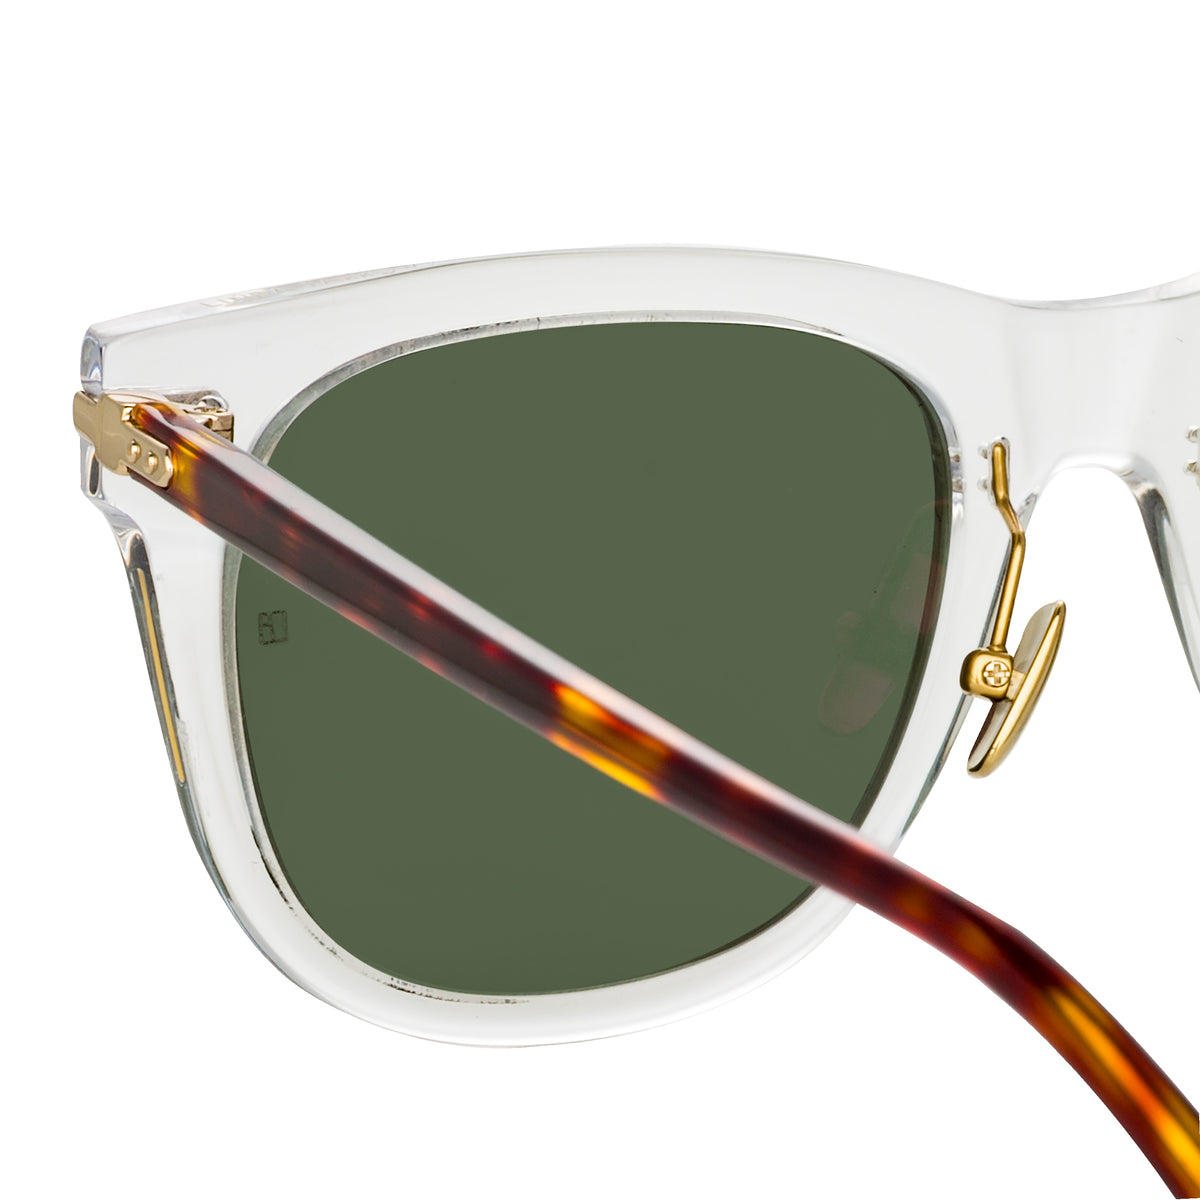 Active Lifestyle Prescription Sunglasses For Men And Women - Tifosi Optics